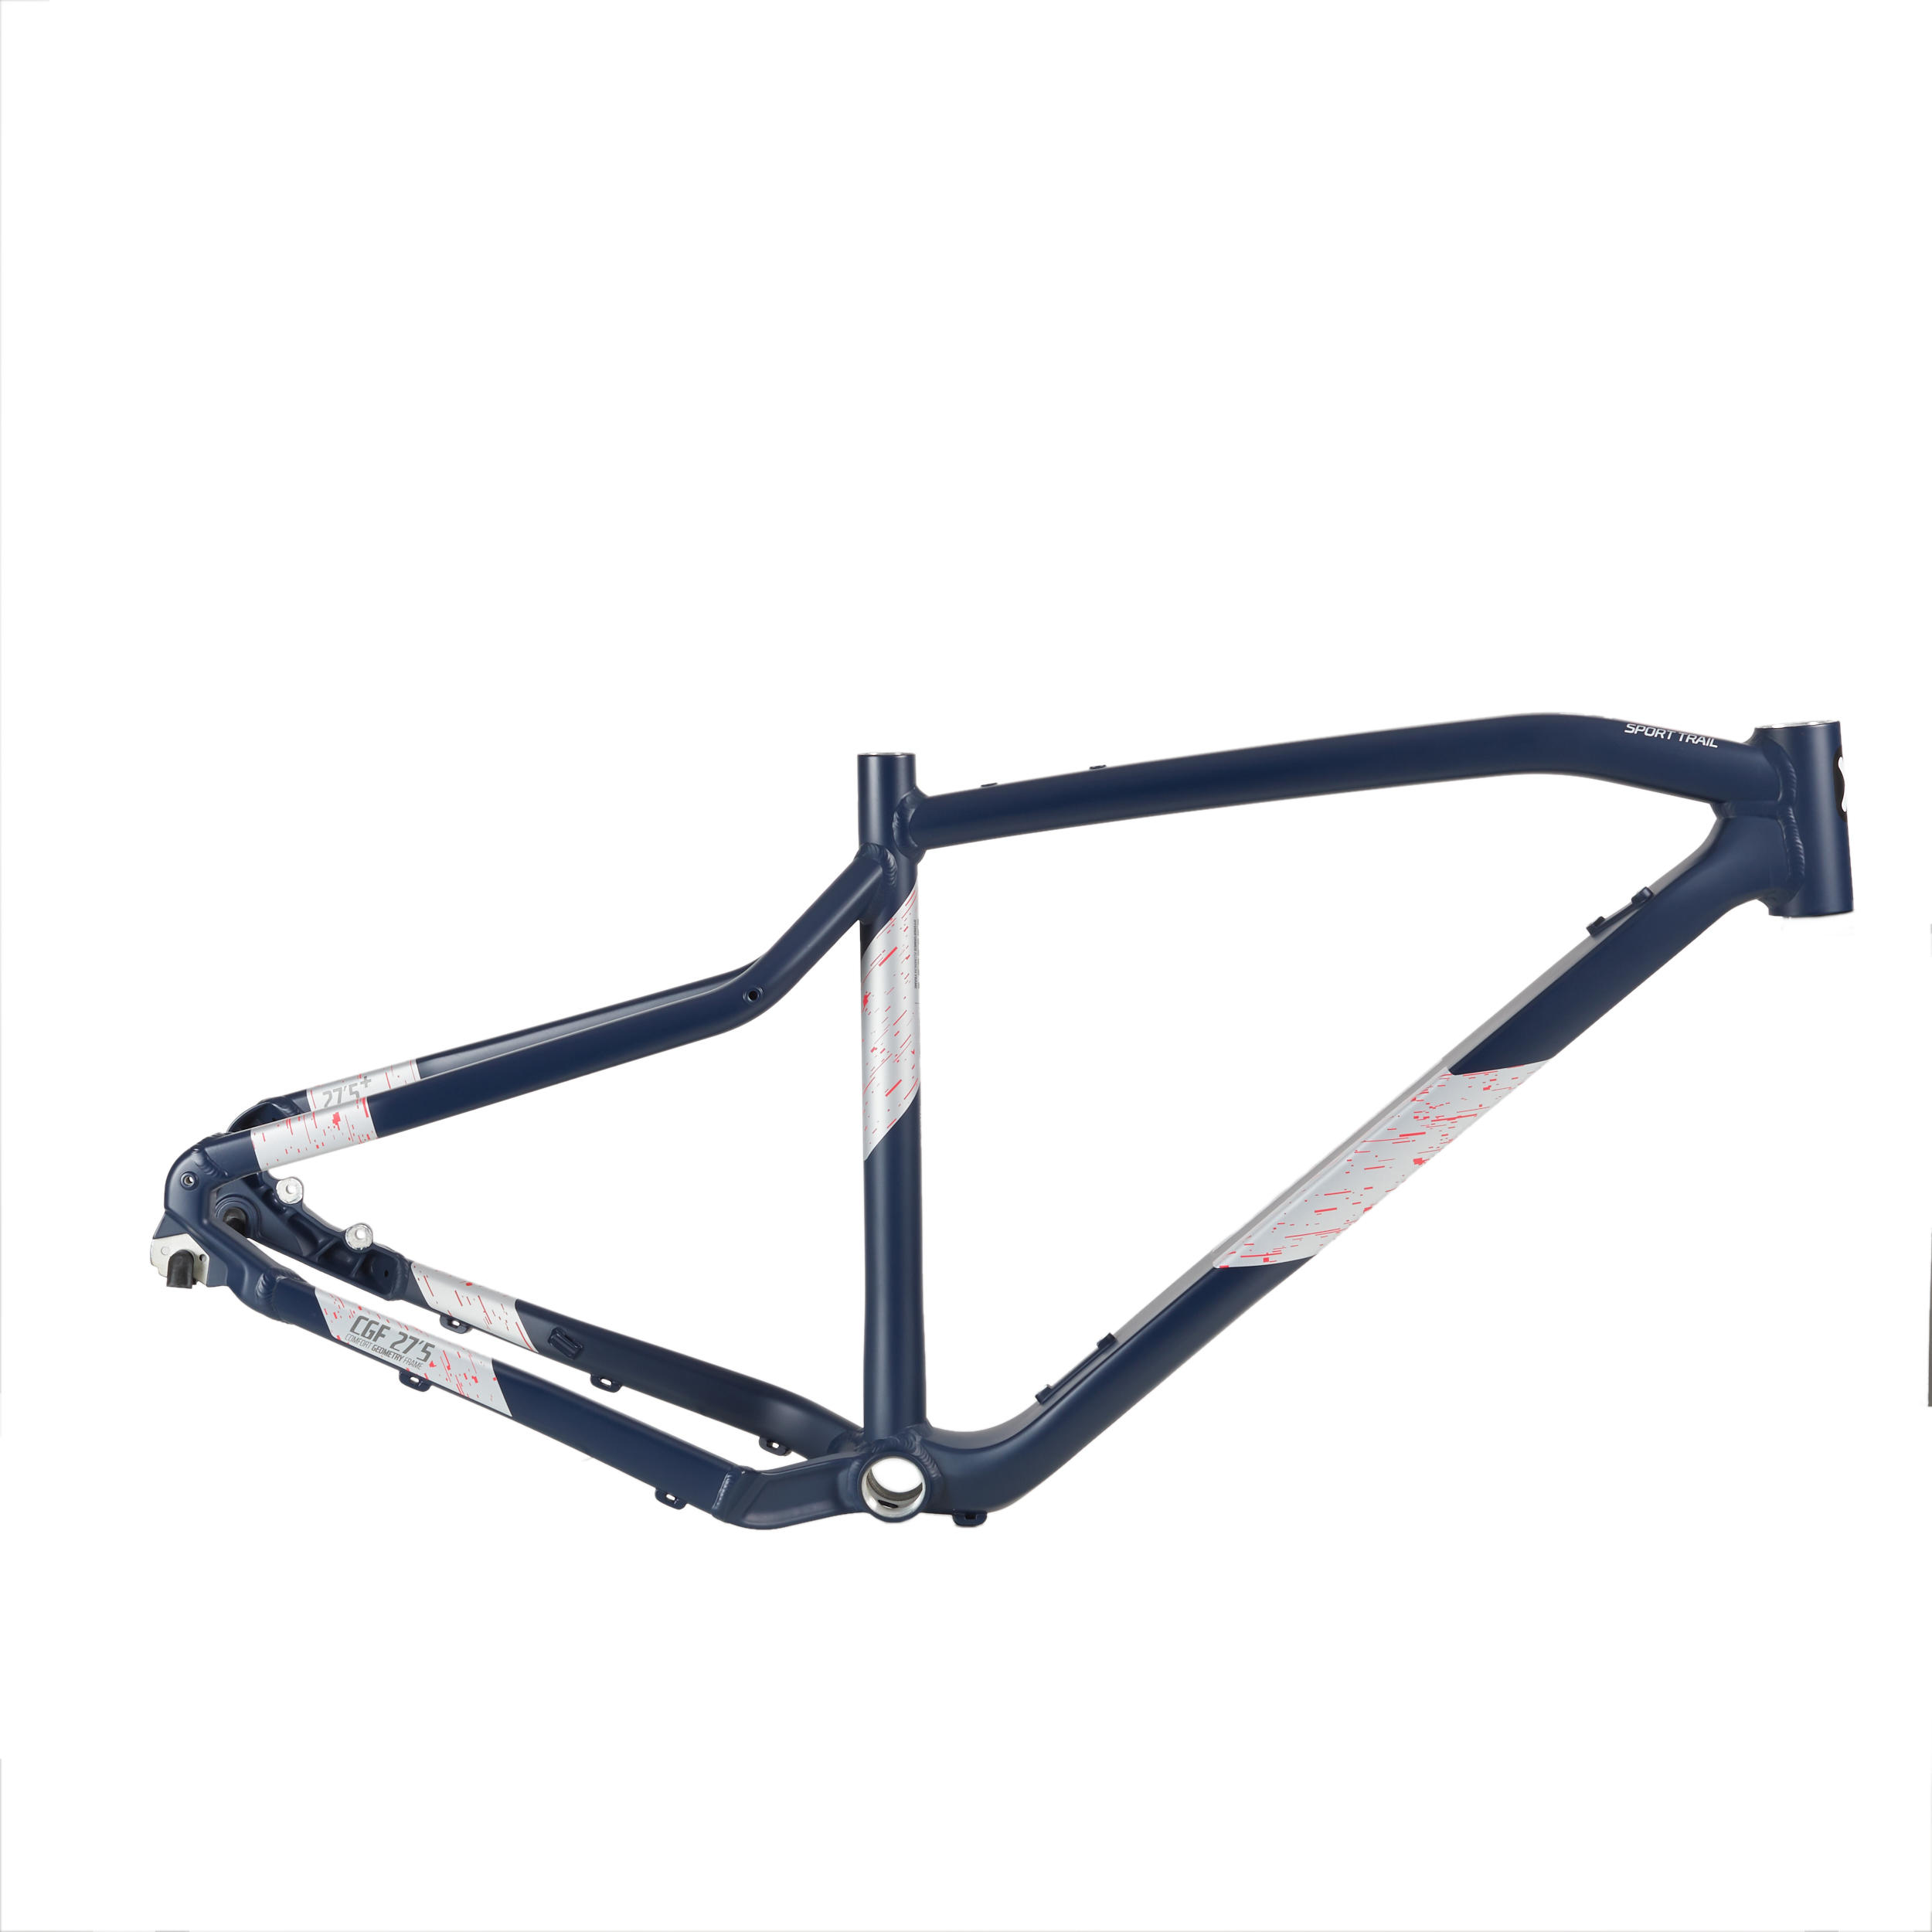 ROCKRIDER 27.5" Aluminium Mountain Bike Frame E-ST 500 MPA-E17 - Blue/Pink